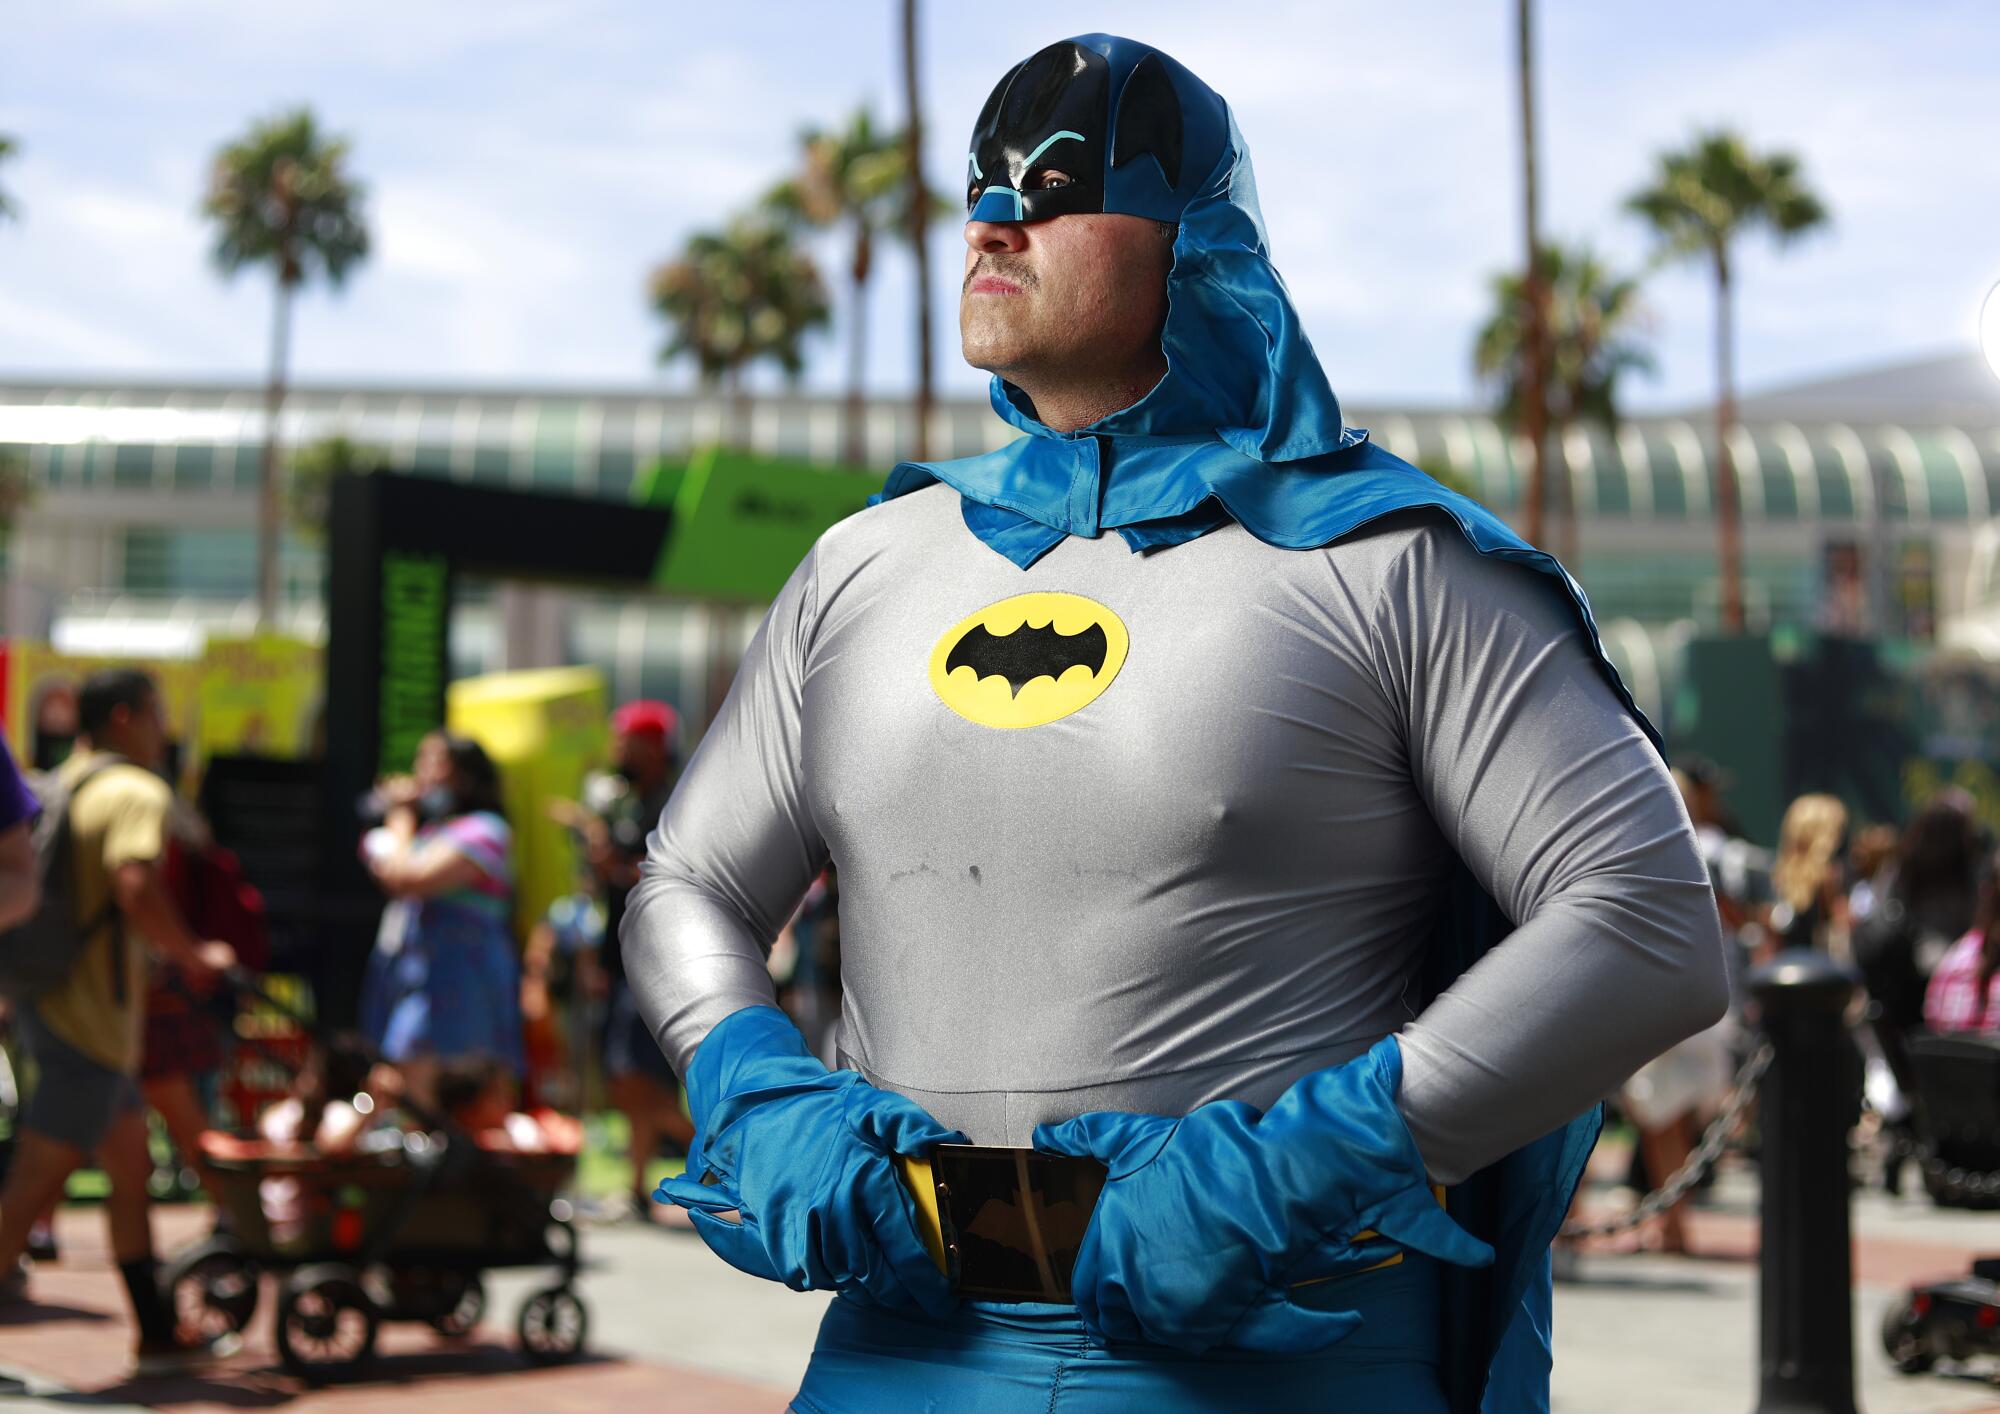 Jere Mason of Memphis dressed as Budget Batman at Comic-Con.